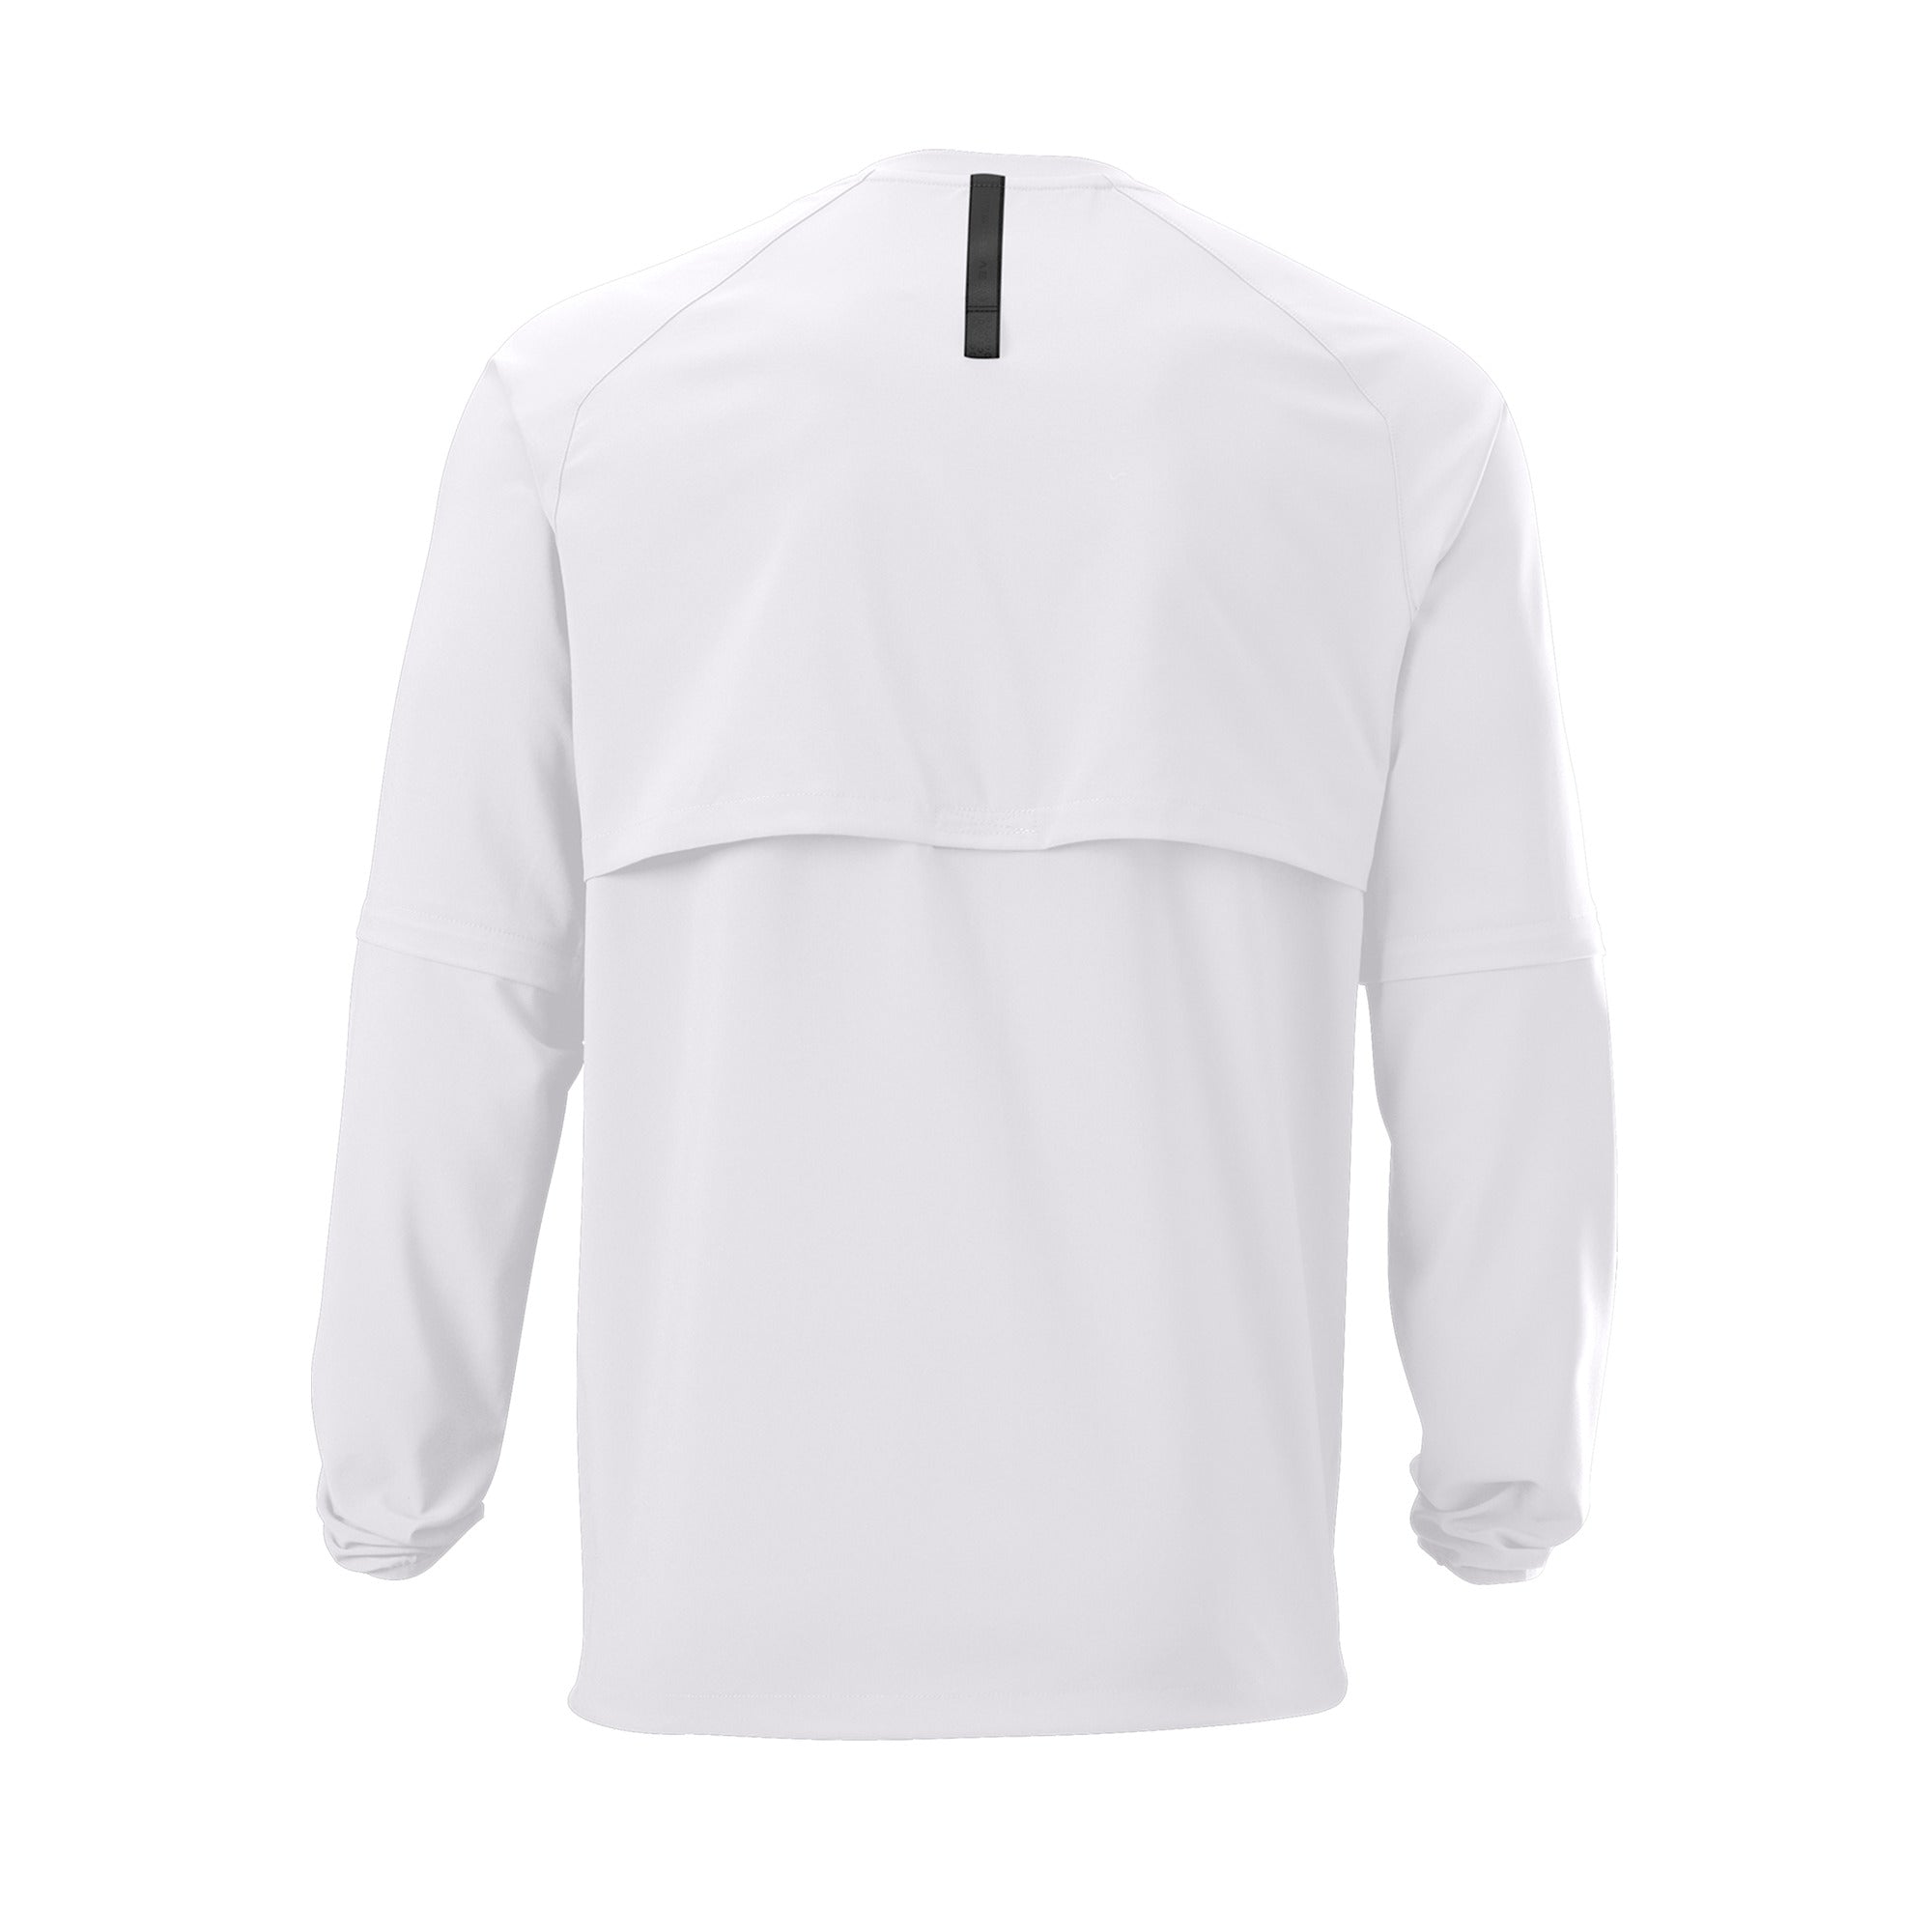 Evoshield Adult Long Sleeve BP Jacket Team White